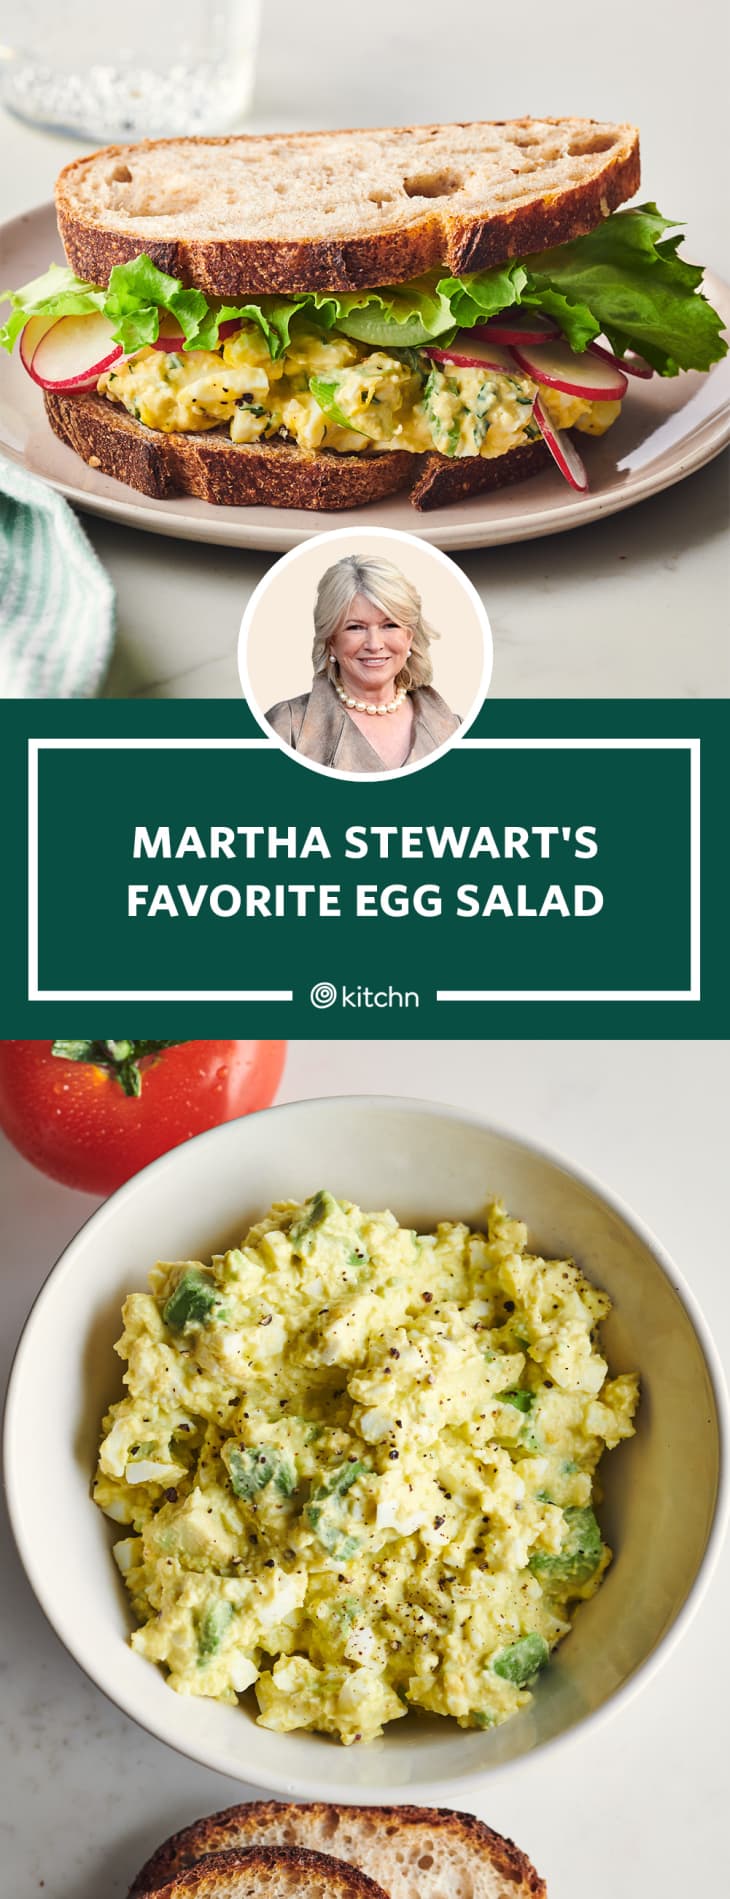 I Tried Martha Stewart's Favorite Egg Salad Recipe | The Kitchn